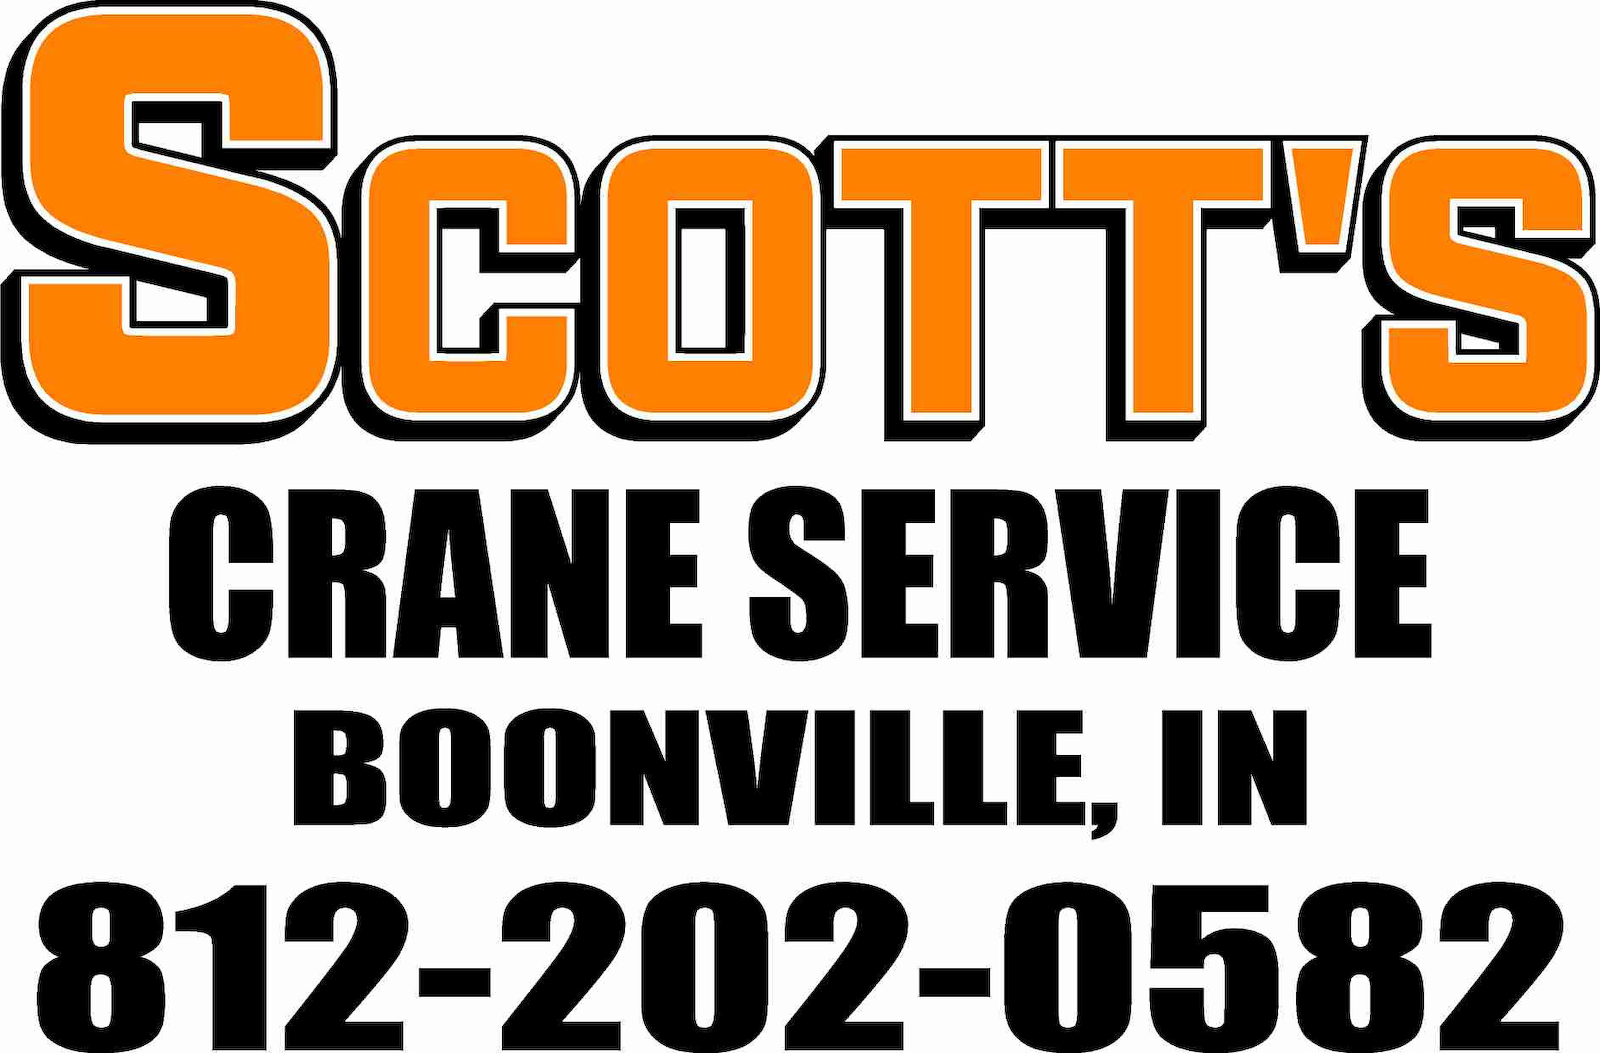 Scott's Crane Service